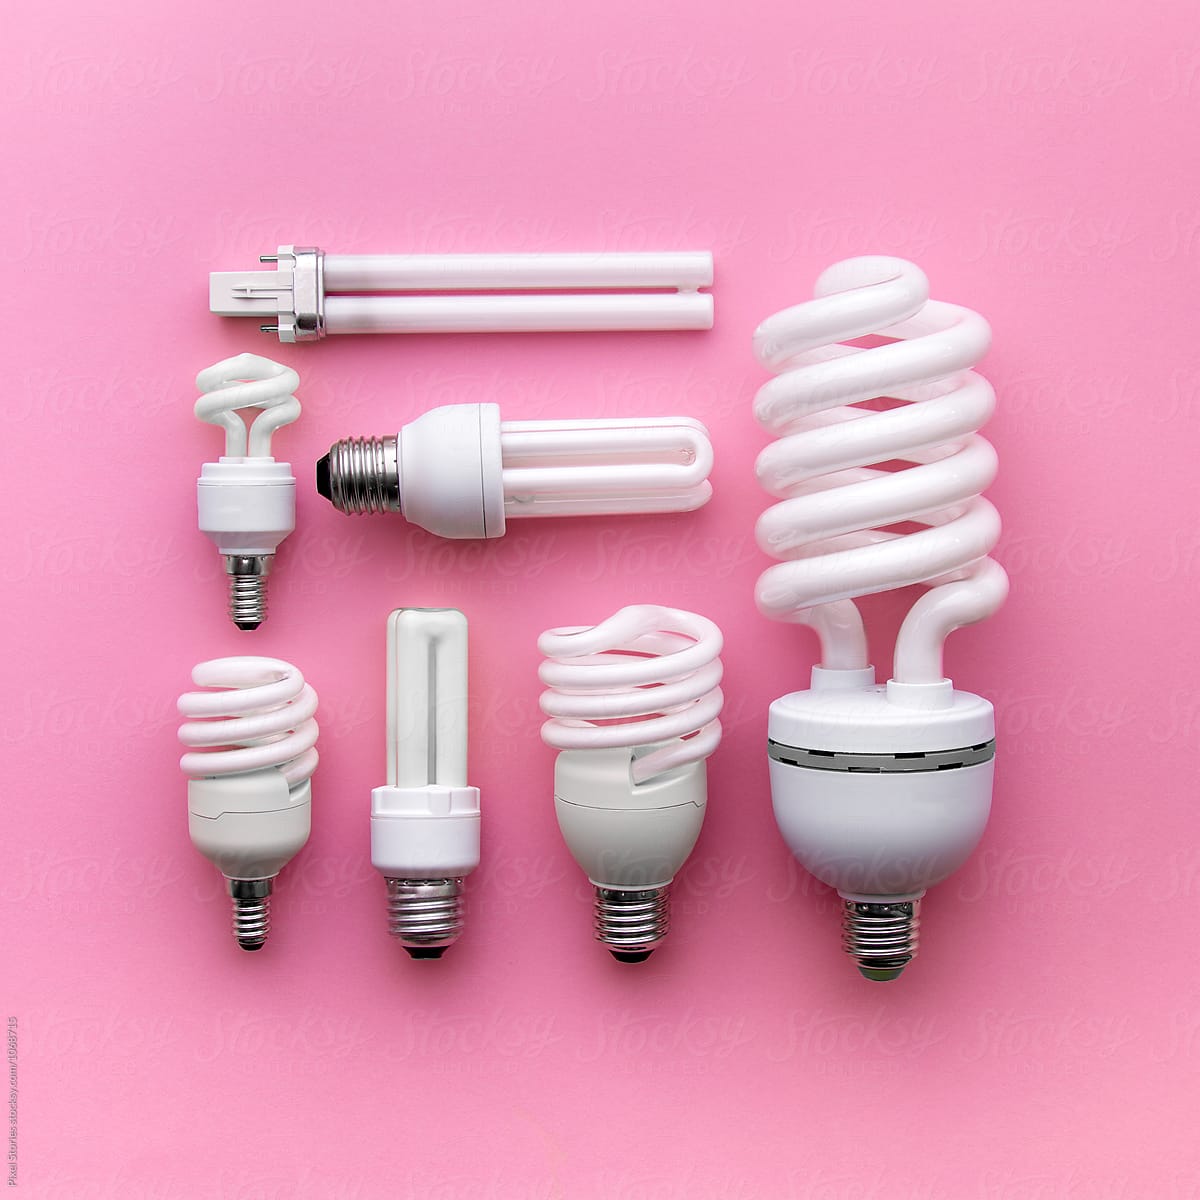 Energy-saving light bulbs on pink background